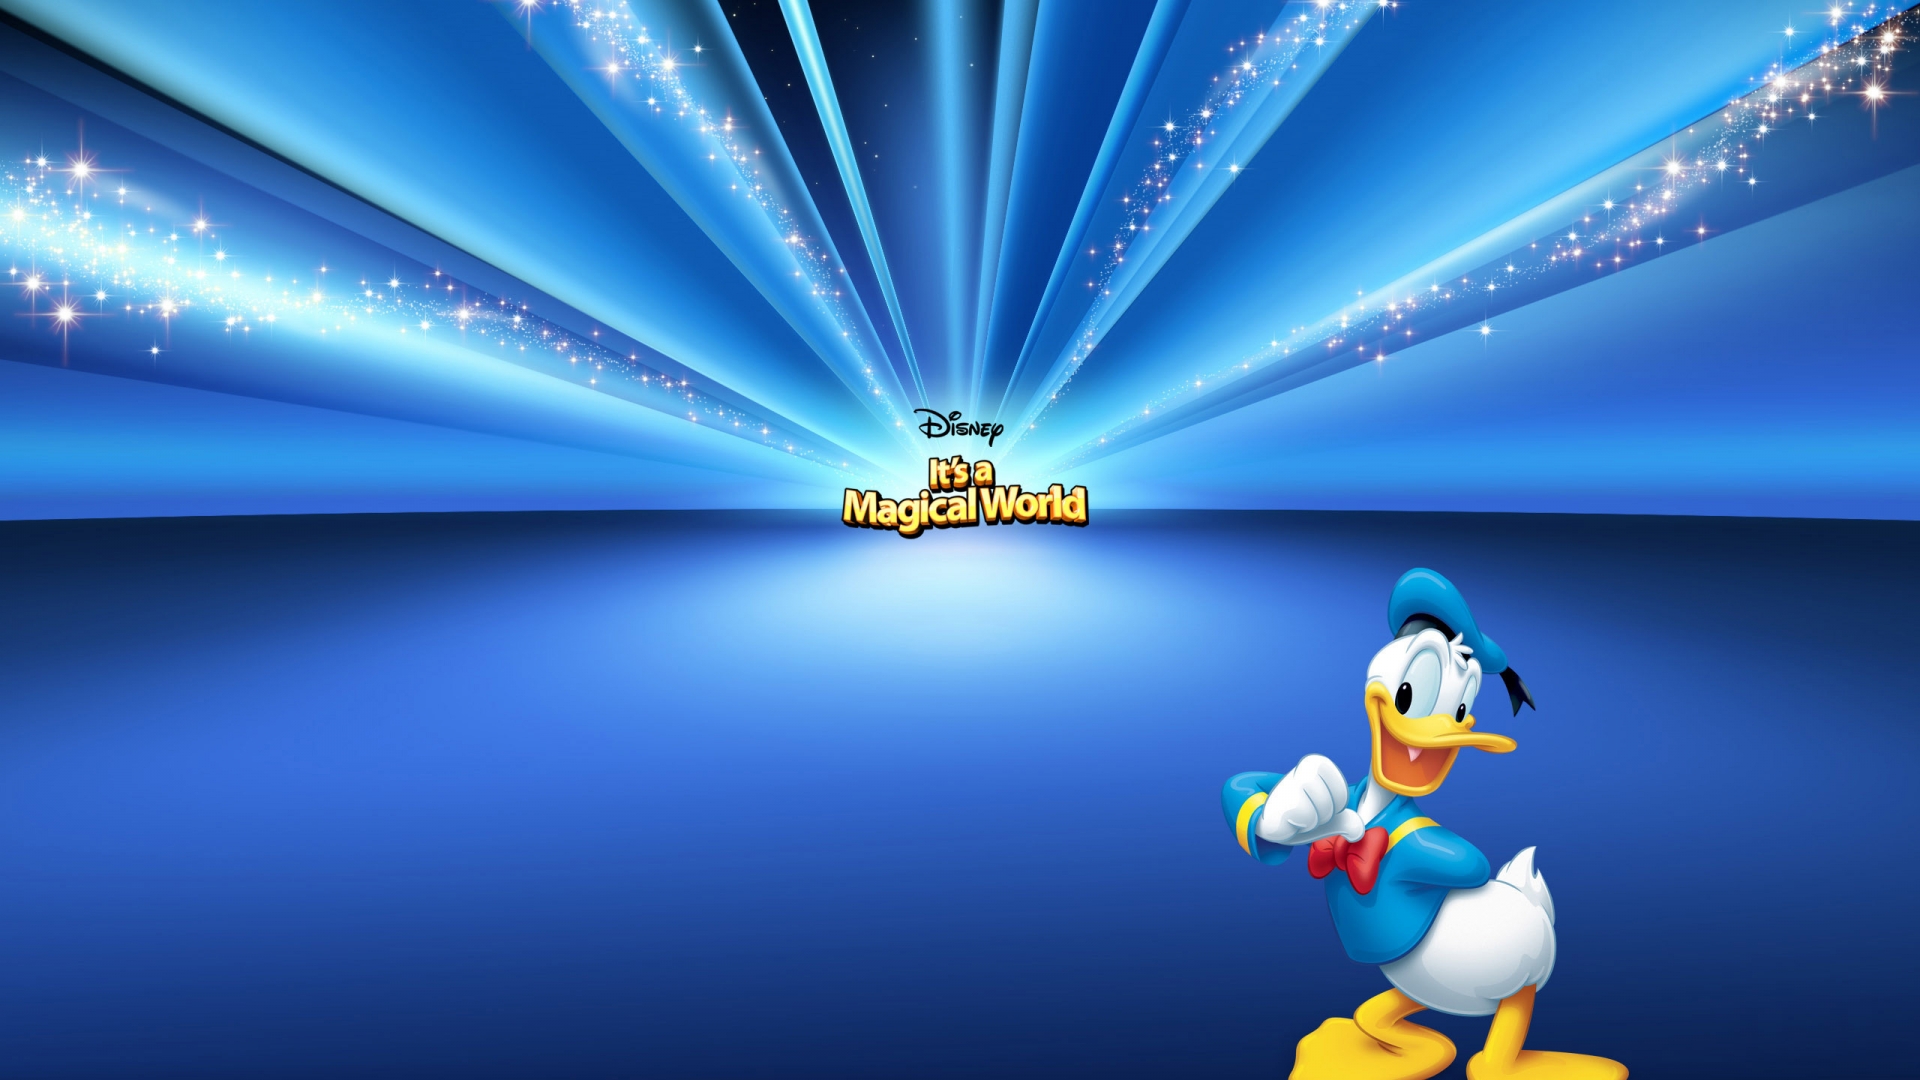 Donald Duck Cartoon for 1920 x 1080 HDTV 1080p resolution